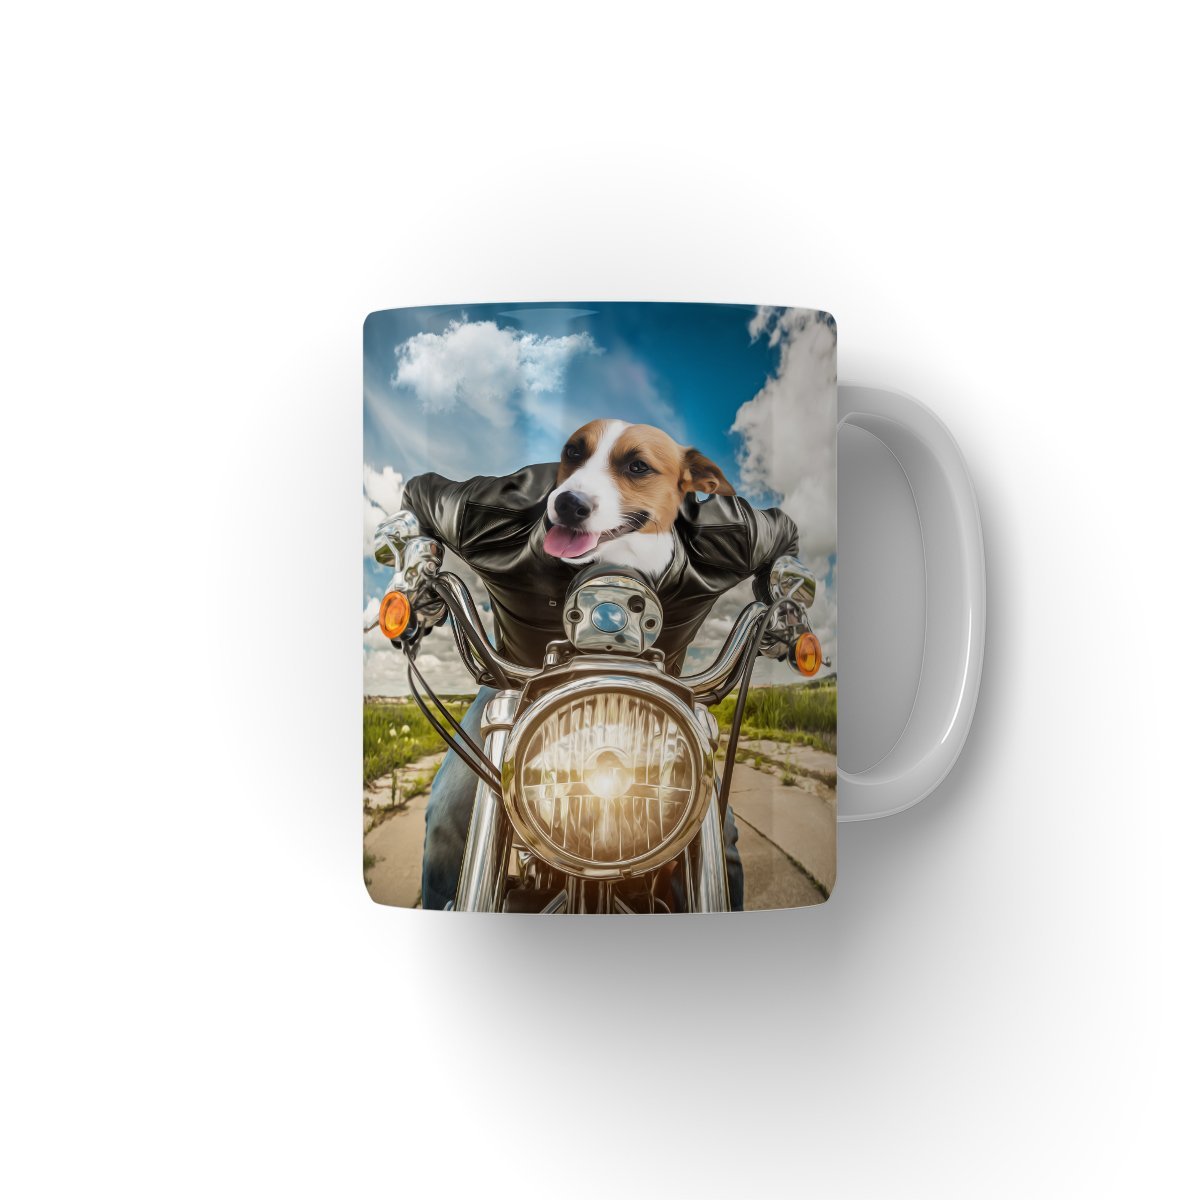 Harley Woofingson 1 Pet: Custom Pet Mug - Paw & Glory - #pet portraits# - #dog portraits# - #pet portraits uk#pawandglory, pet art Mug,custom mug, personalised dog and owner mug, dog owner mugs, dog coffee mugs personalized, christmas dog mug